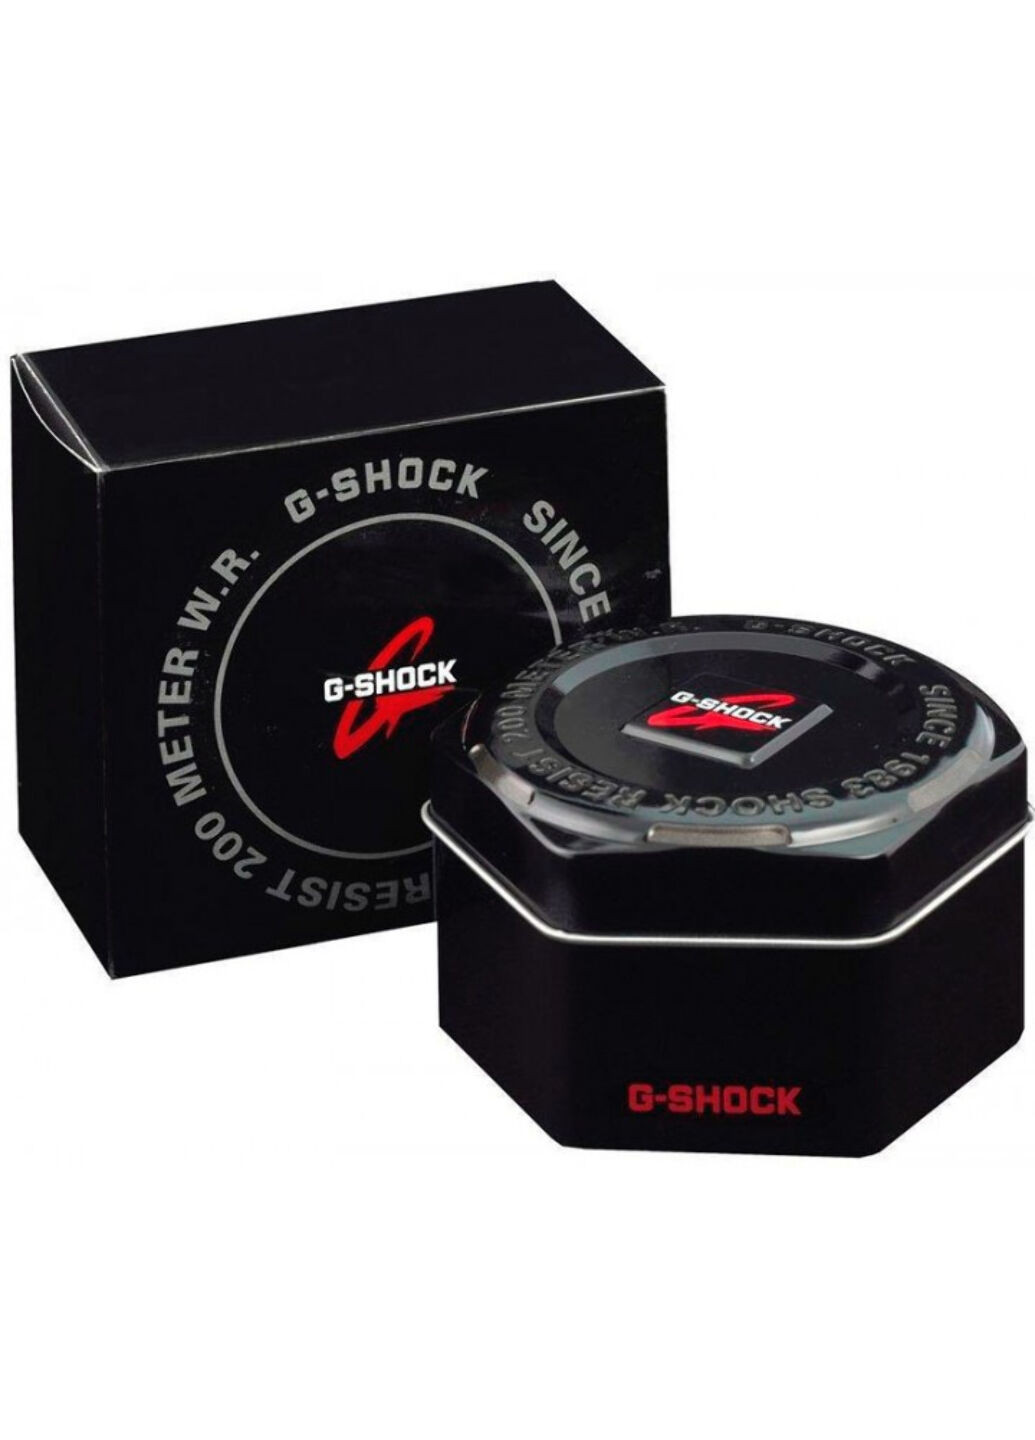 Часы наручные Casio glx-s5600-4er (260031634)